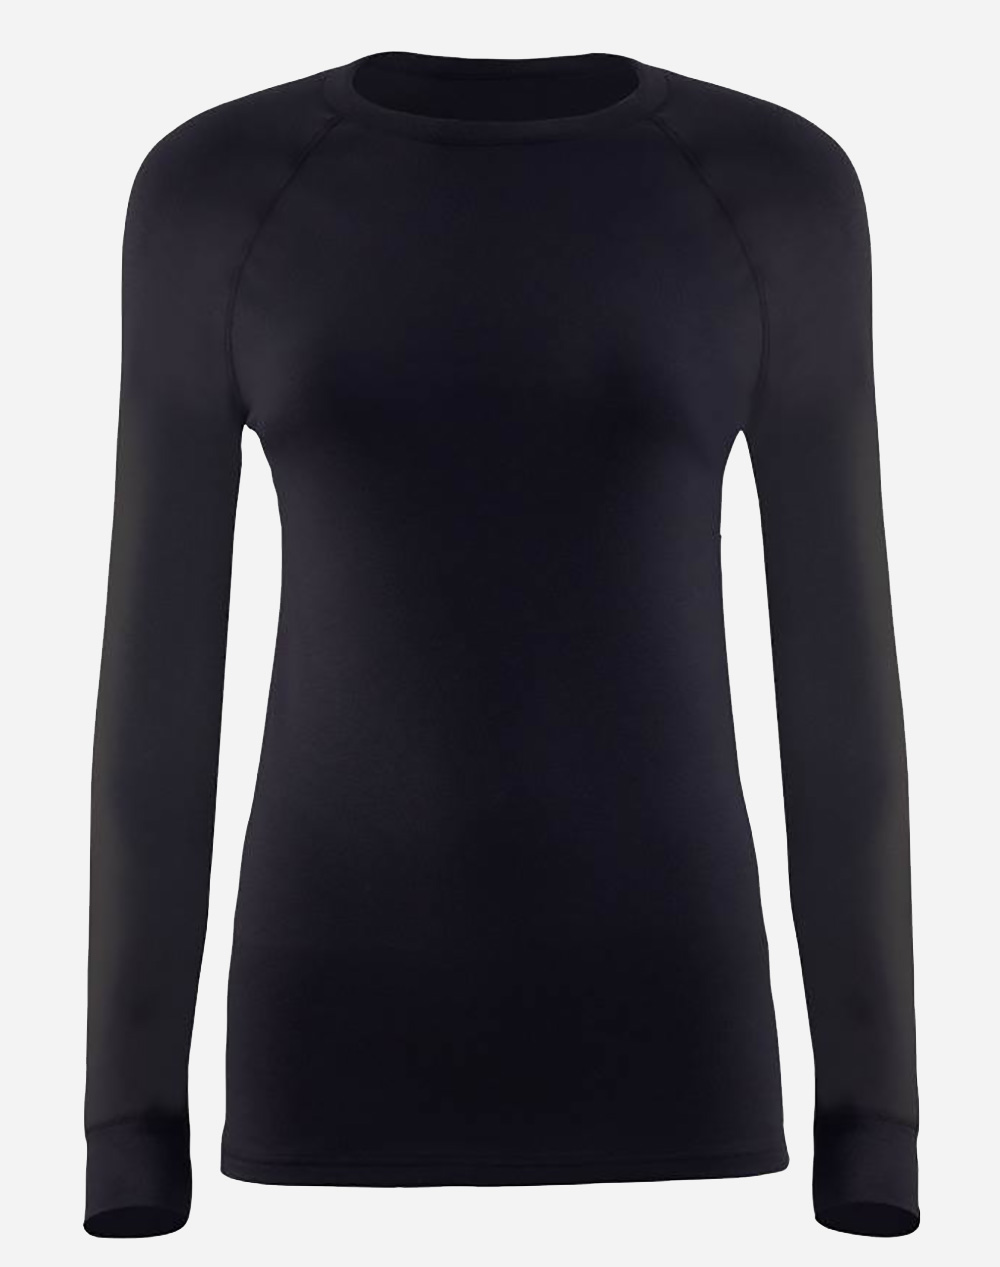 BLACKSPADE Thermal Active Unisex T-Shirt Long Slv 9259 14.01.39.010-BLACK Black